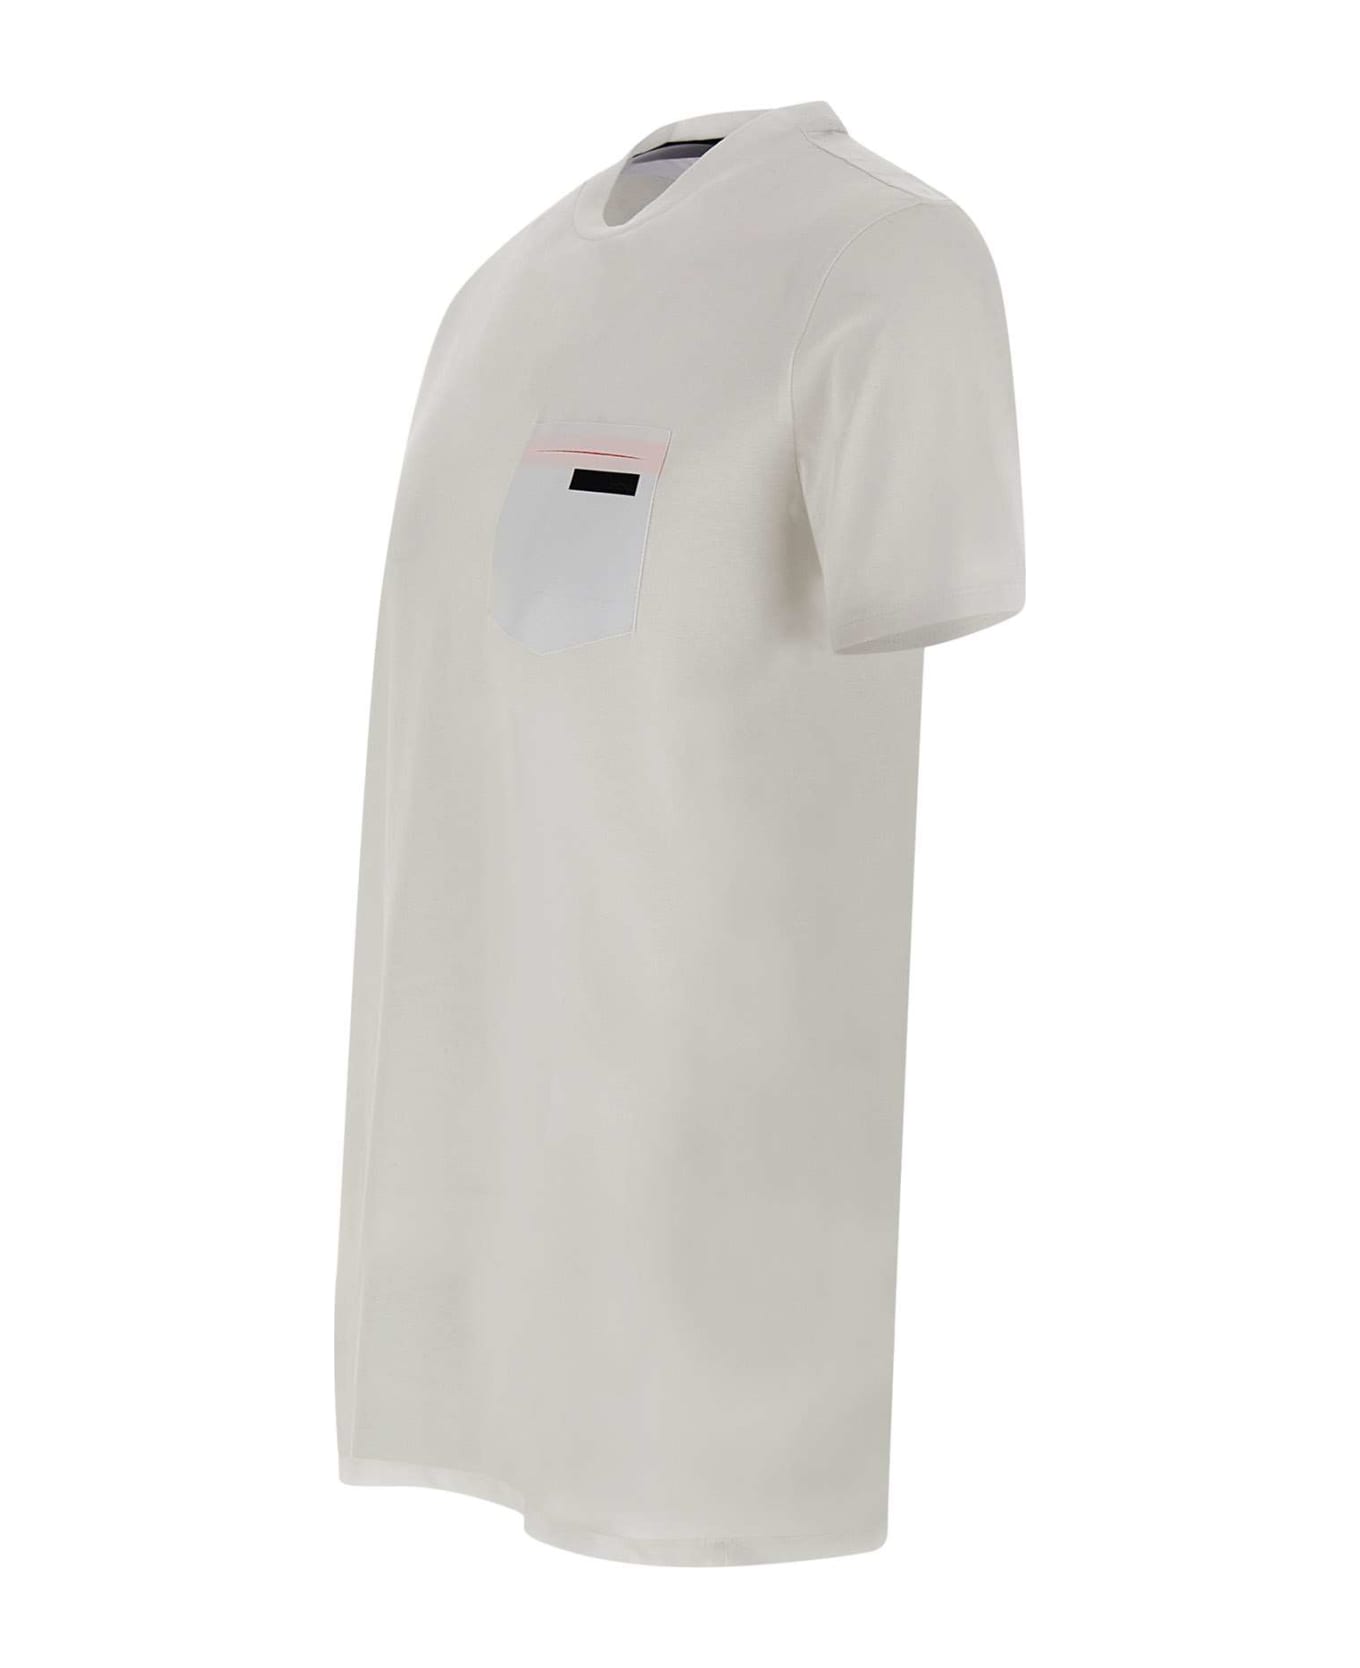 RRD - Roberto Ricci Design 'revo Shirty' T-shirt - Bianco